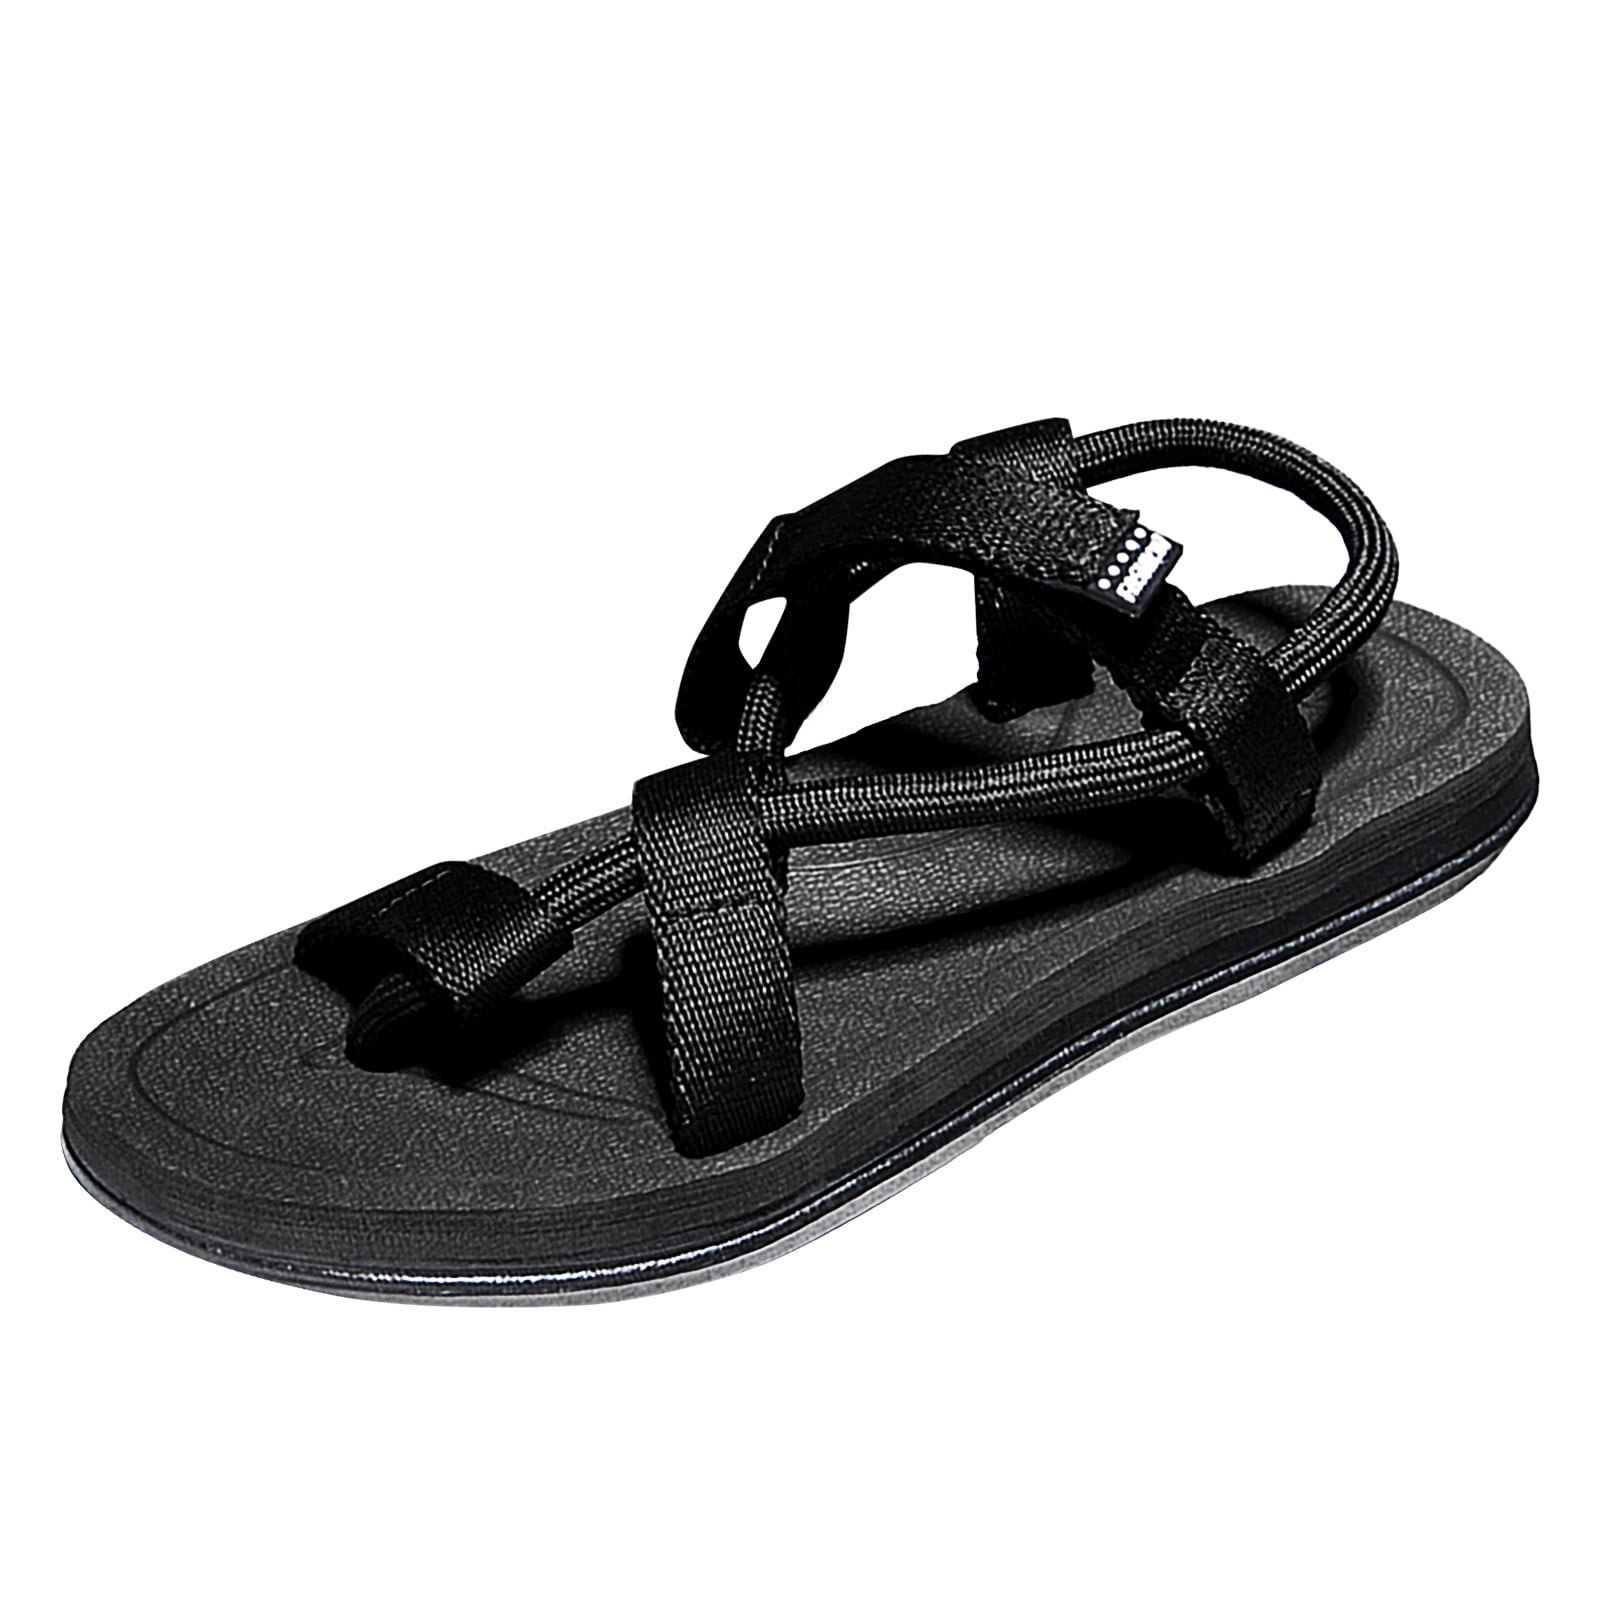 kpoplk Sandals Men,Men's Casual Sandals for Men Leather Summer